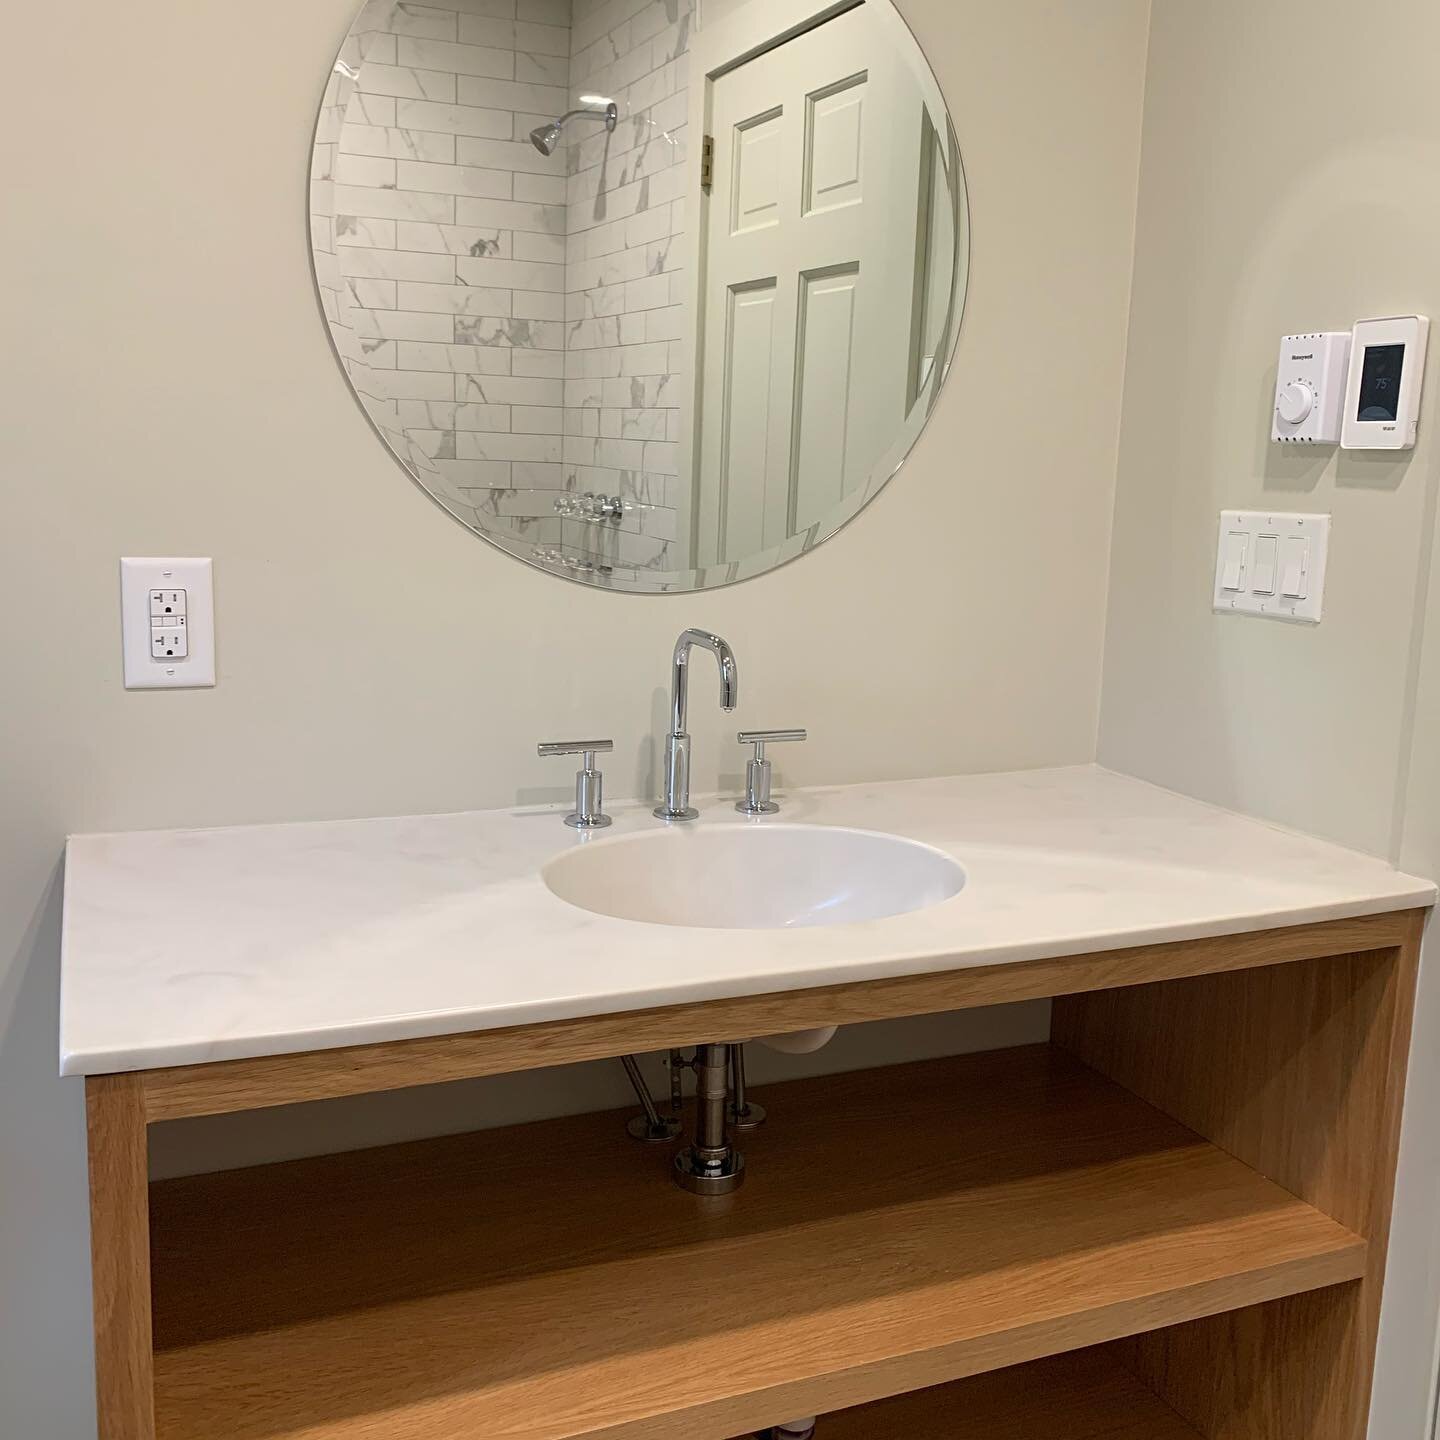 Another beautiful bathroom remodel 

#bathroomremodel #custom #customcabinetry #bathroomsofinstagram #bathroomrenovation #carpentry #construction #bathroomdecor #bathroomdesign